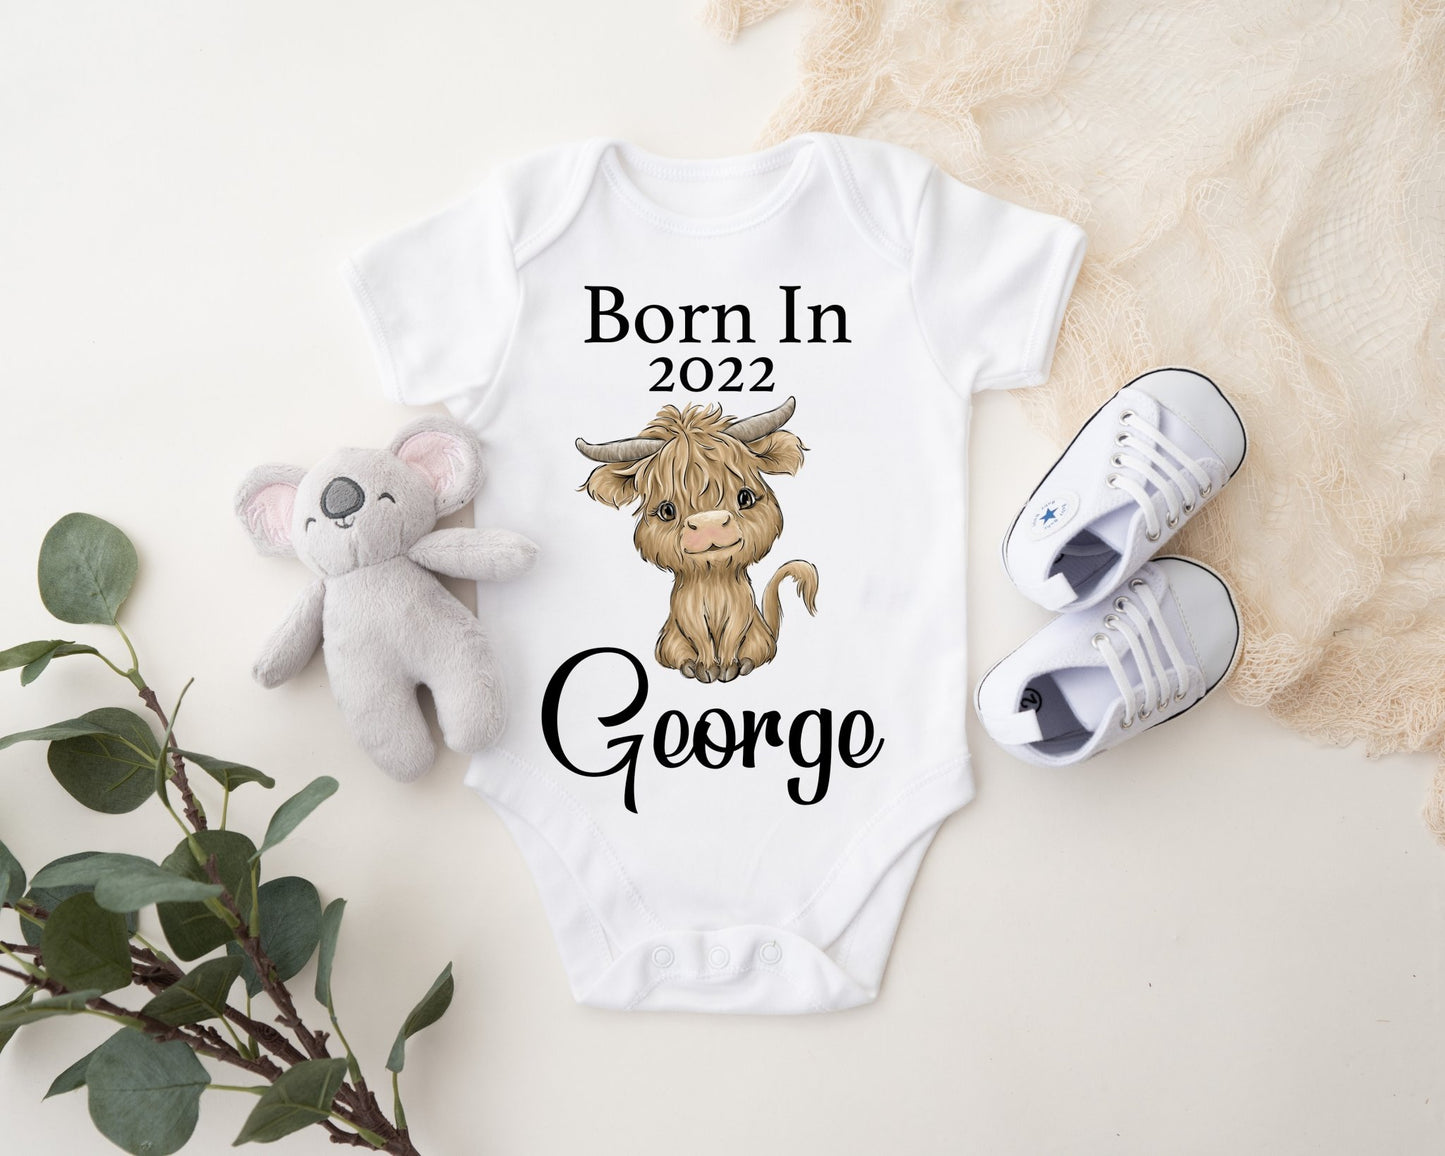 Born In 2022 Vest - Cow Boy Print